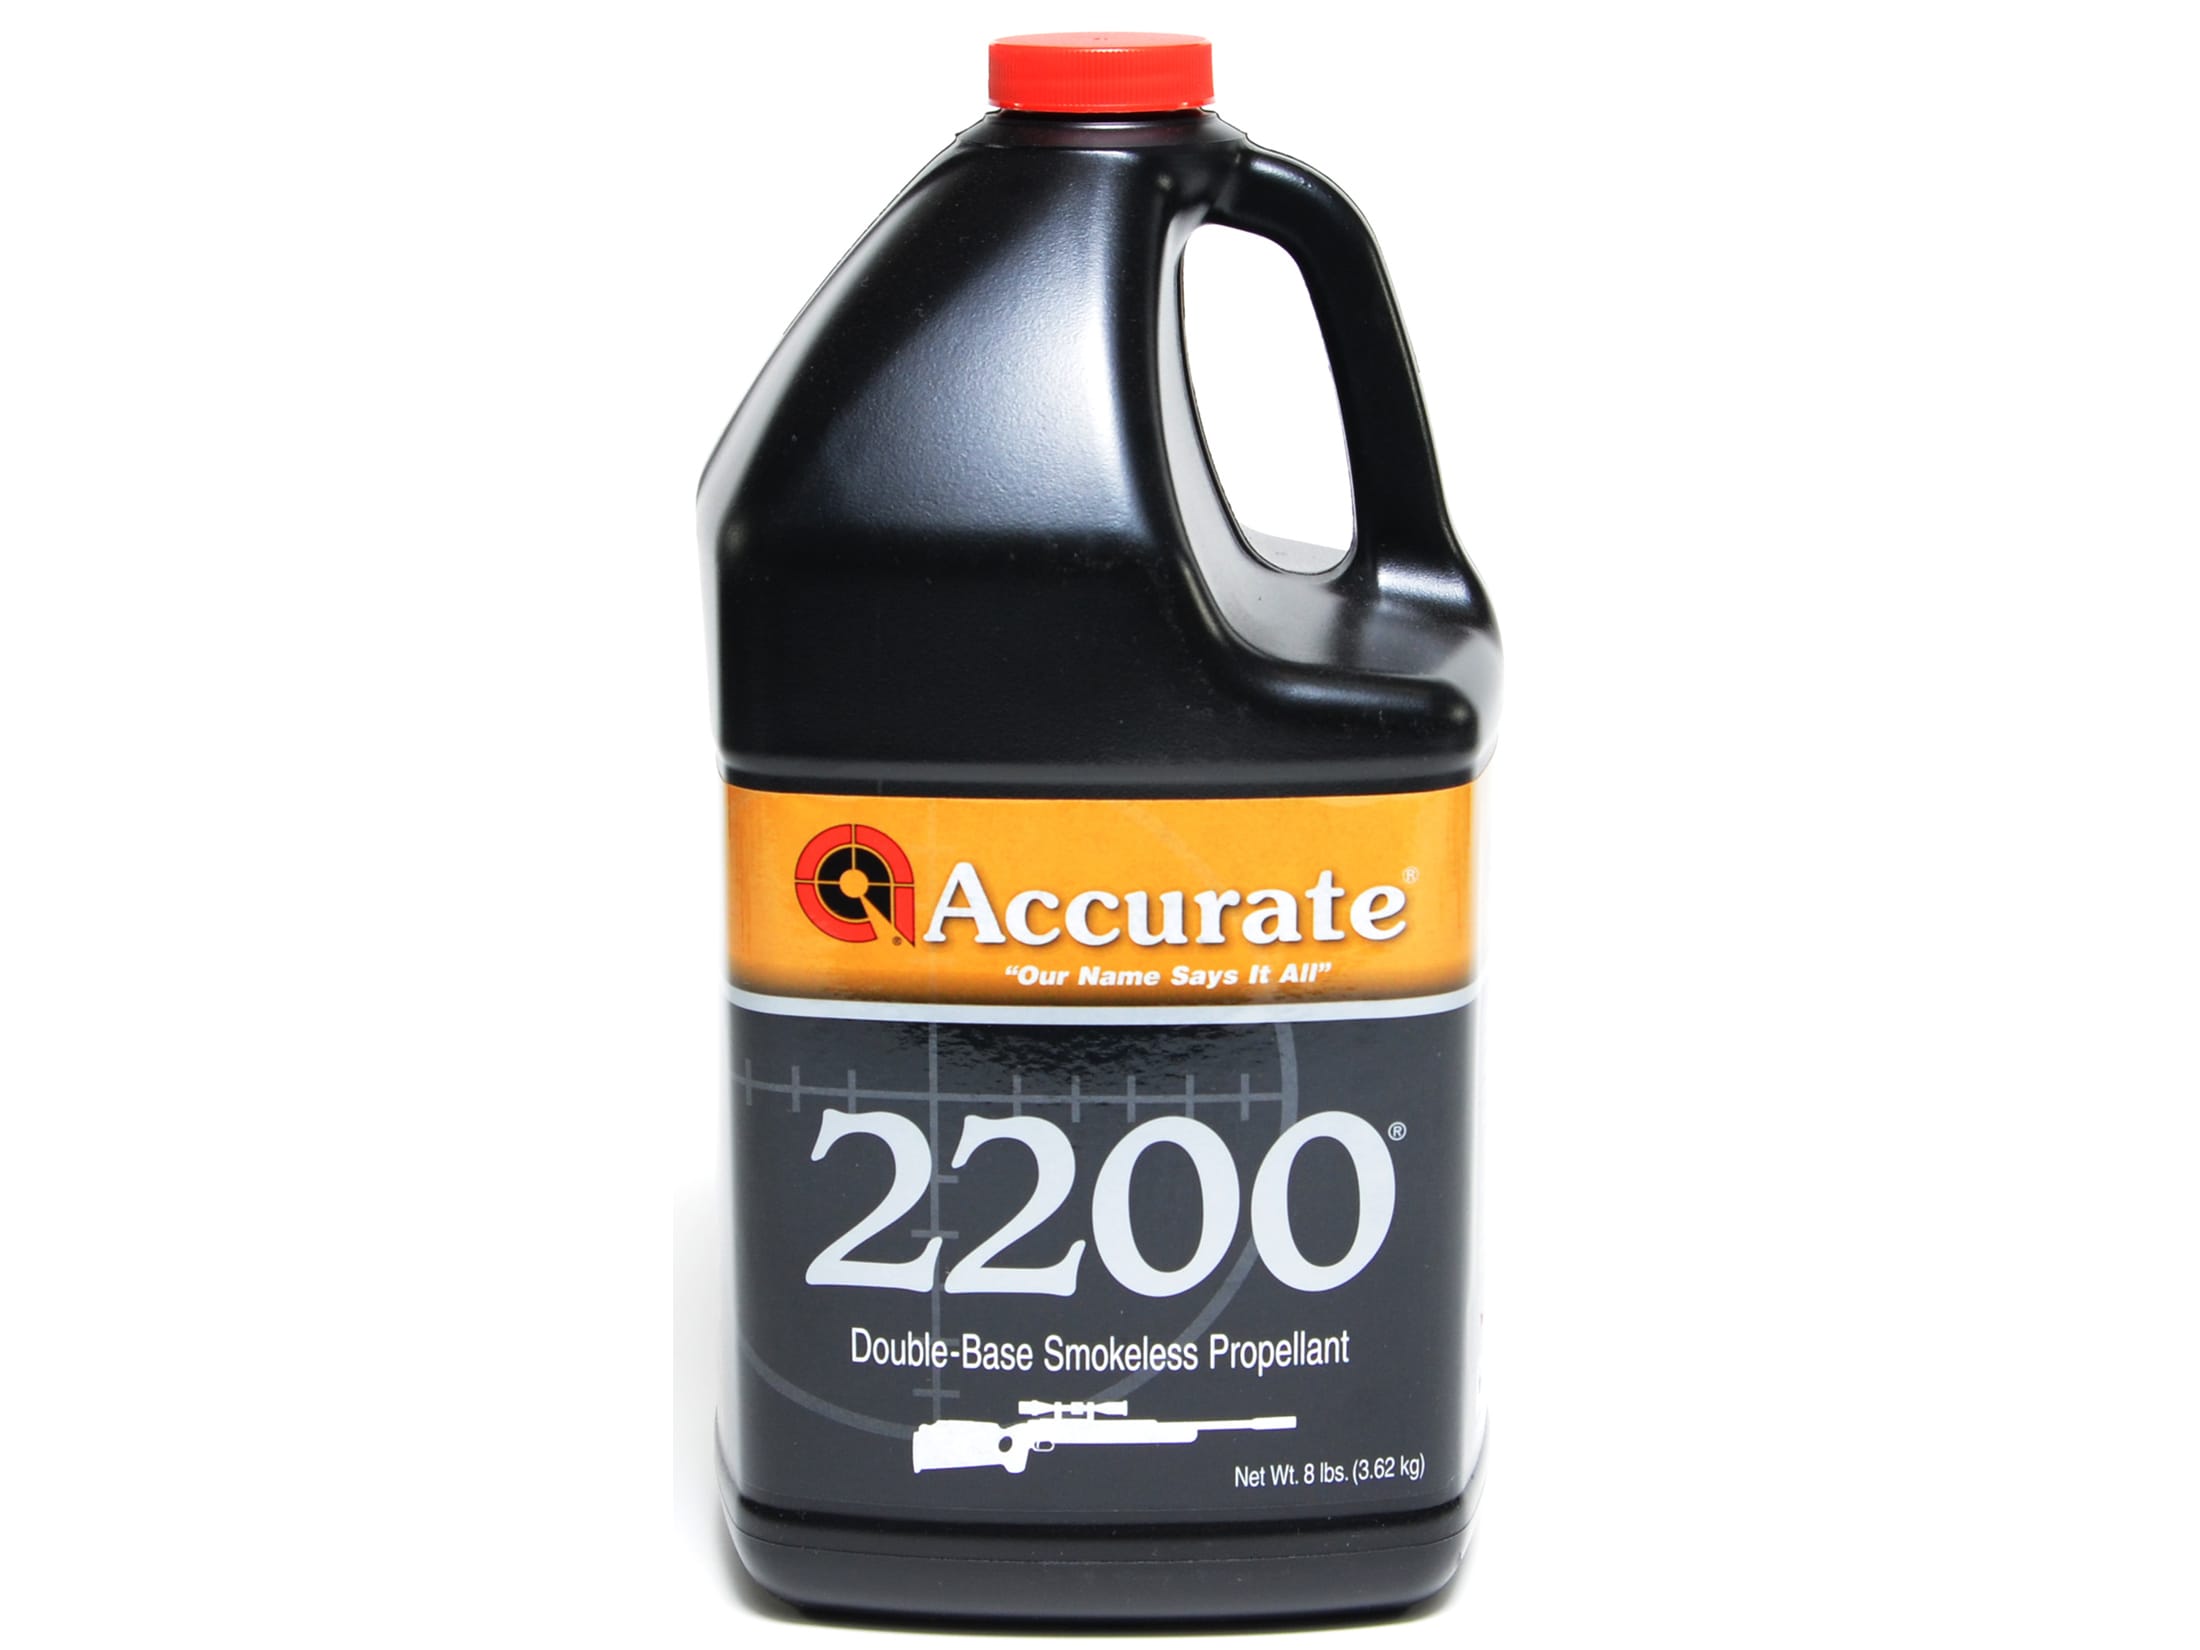 Accurate 2200 Smokeless Powder in stock